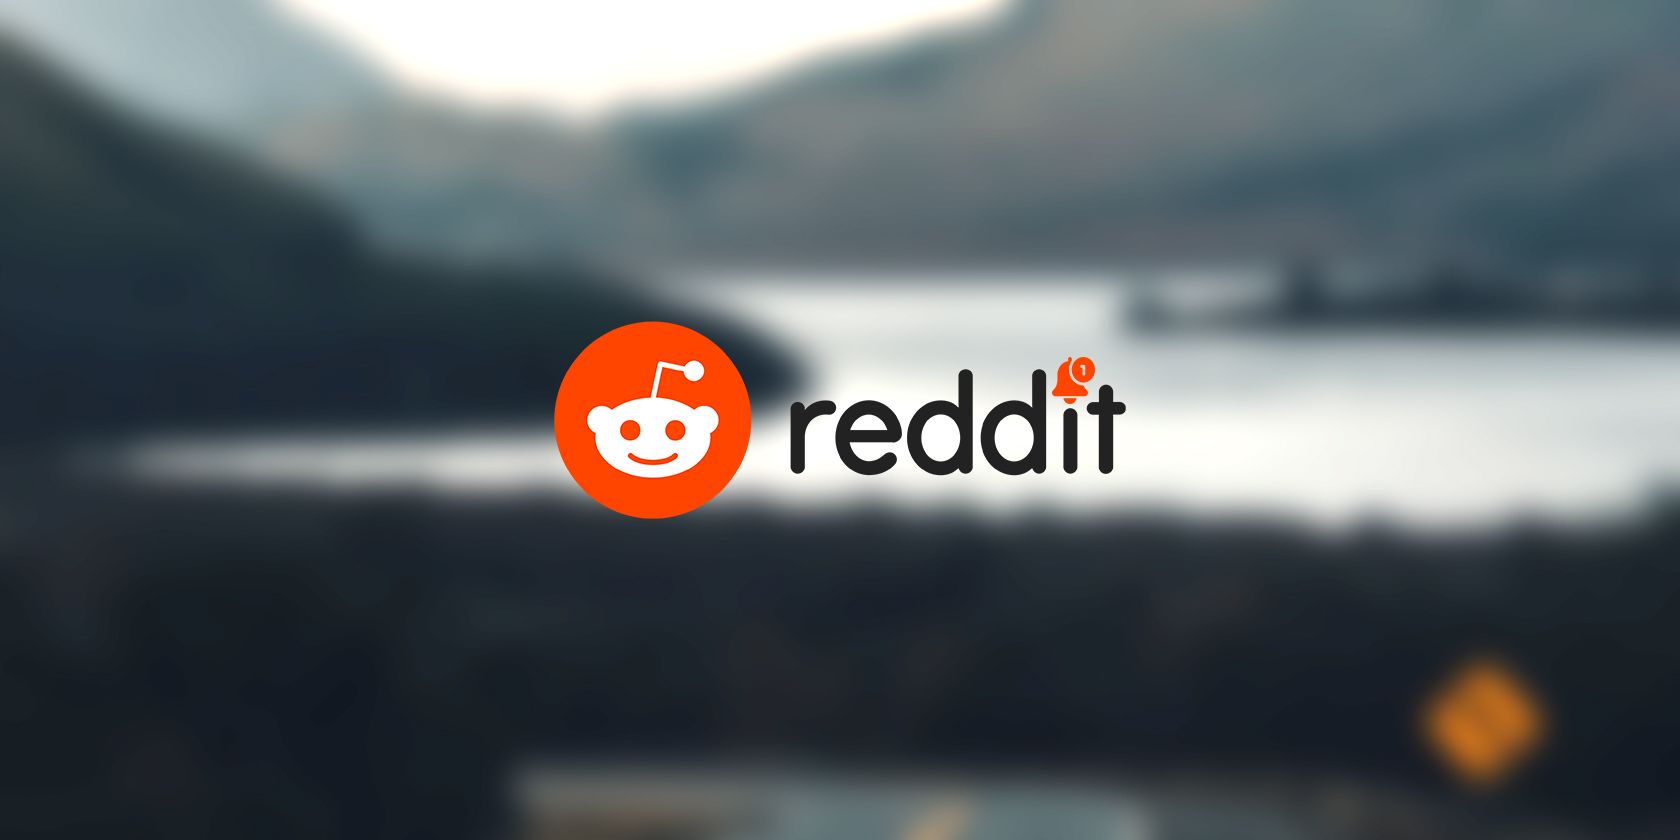 Reddit logo with notification bell